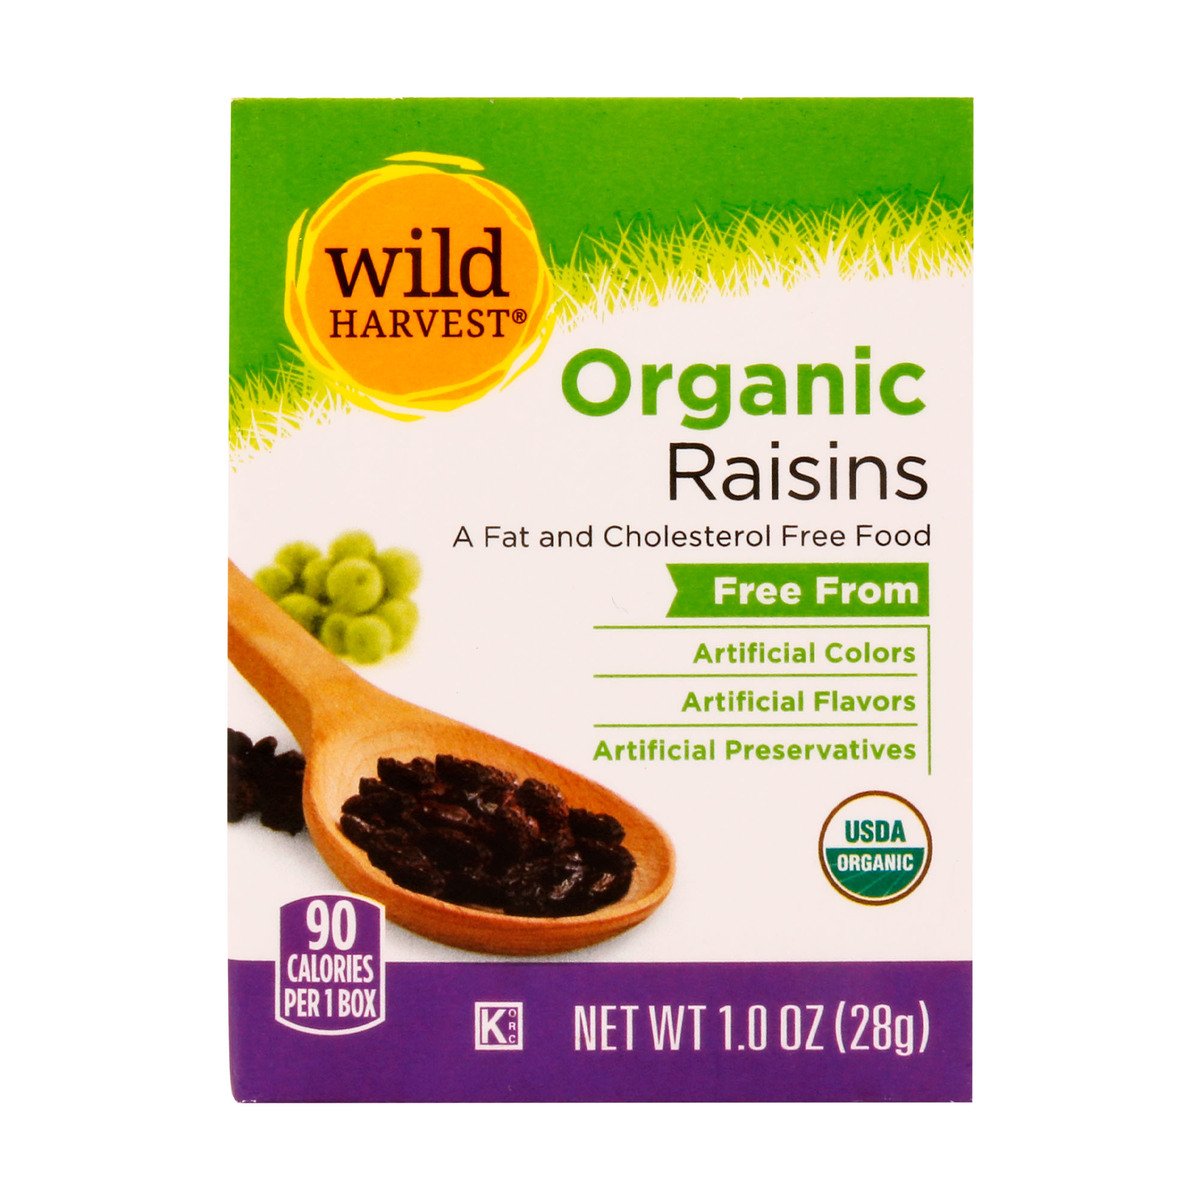 Wild Harvest Organic Raisins 28g